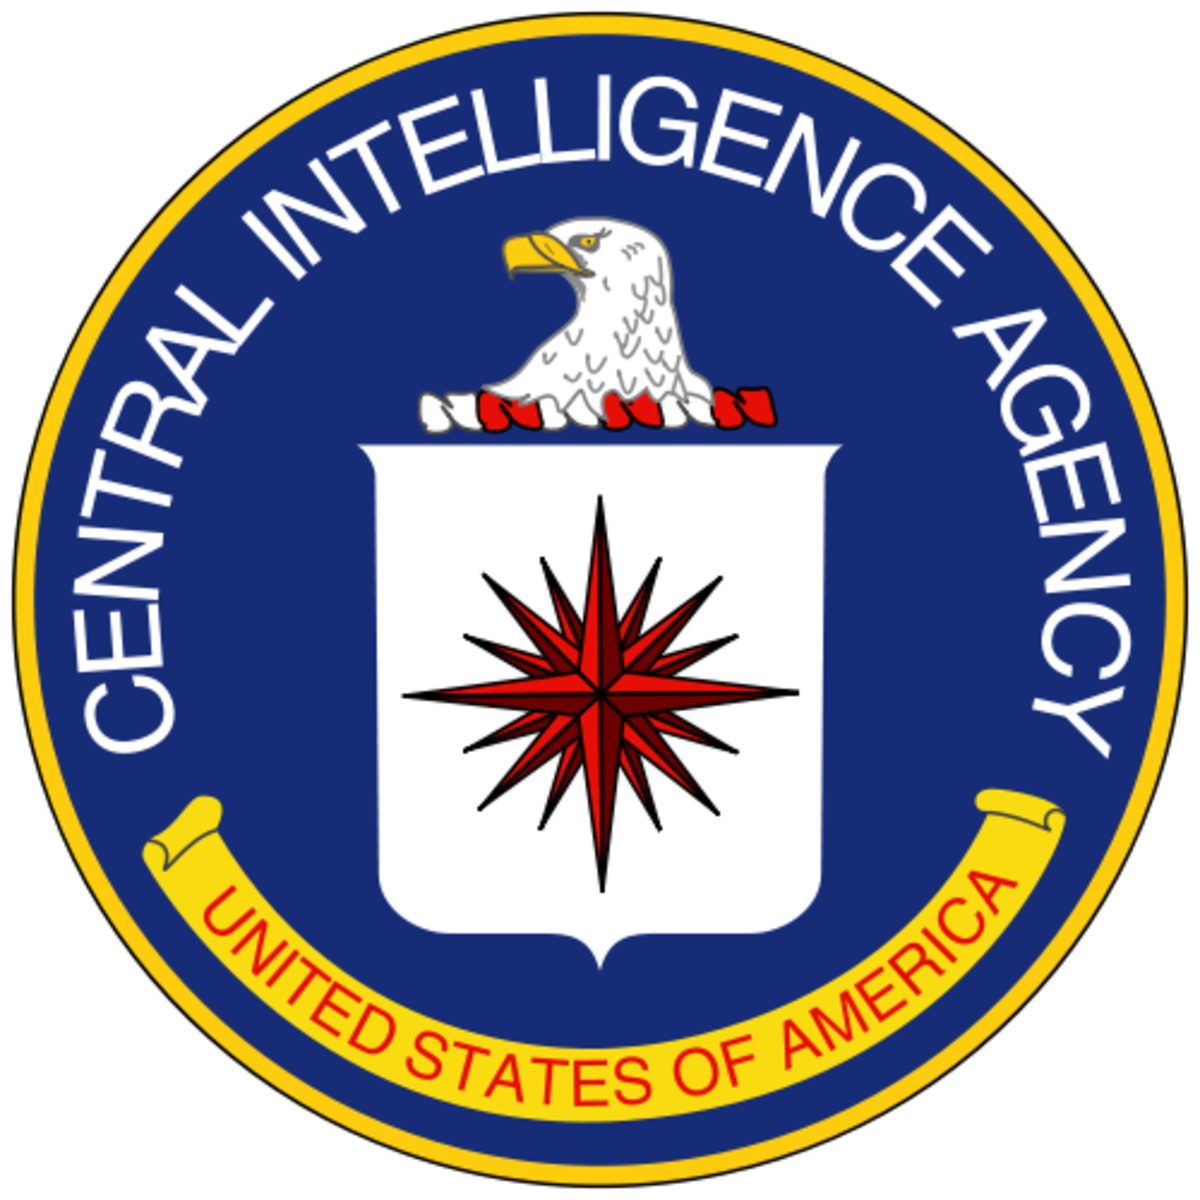 MKUltra: The CIA's Top Secret Psychological Mind Control Experiments